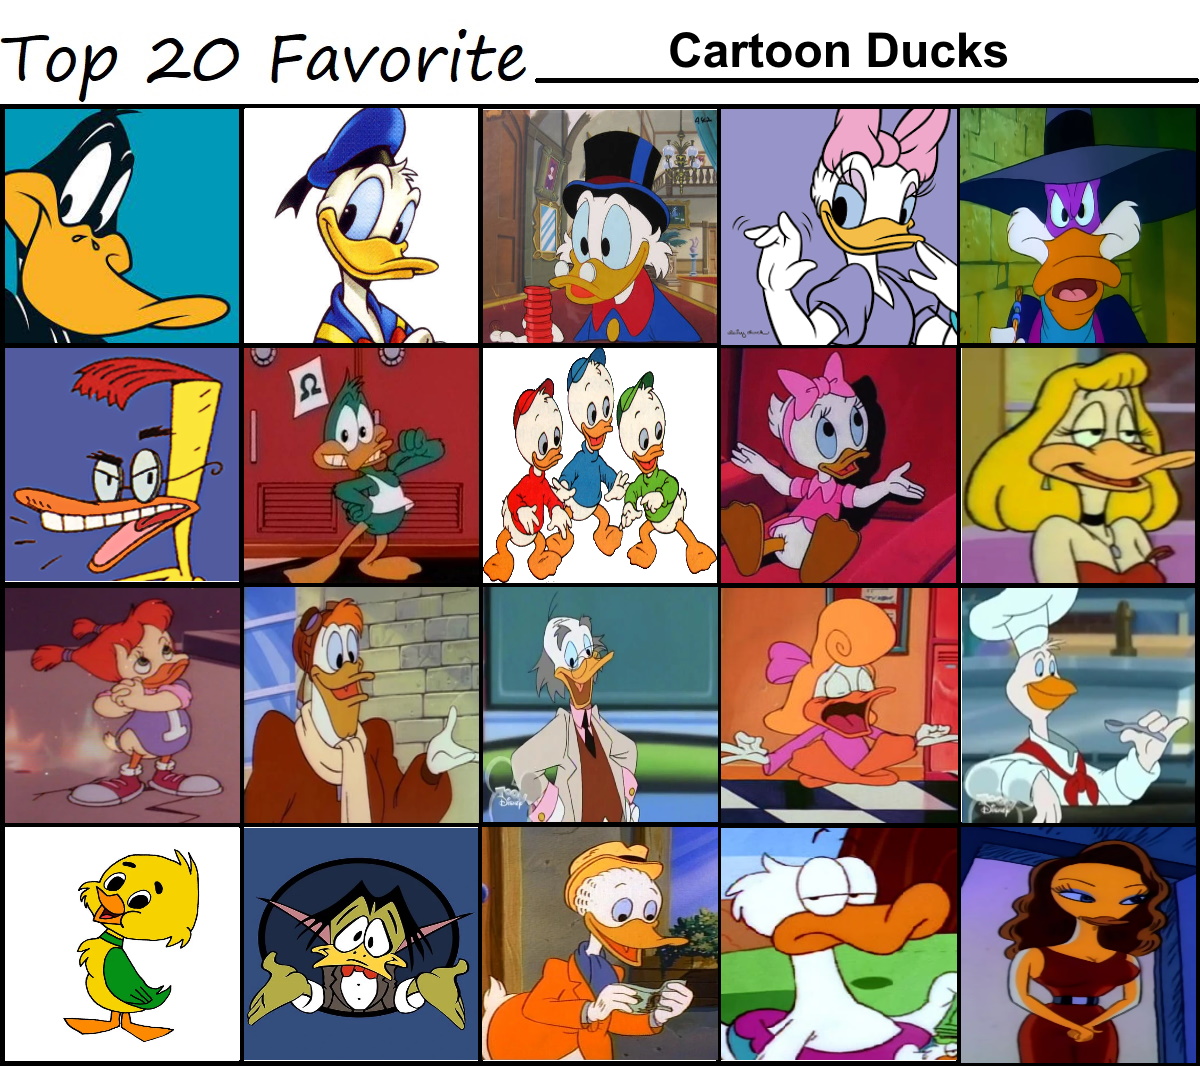 Top 20 Favorite Cartoon Ducks by mnwachukwu16 on DeviantArt